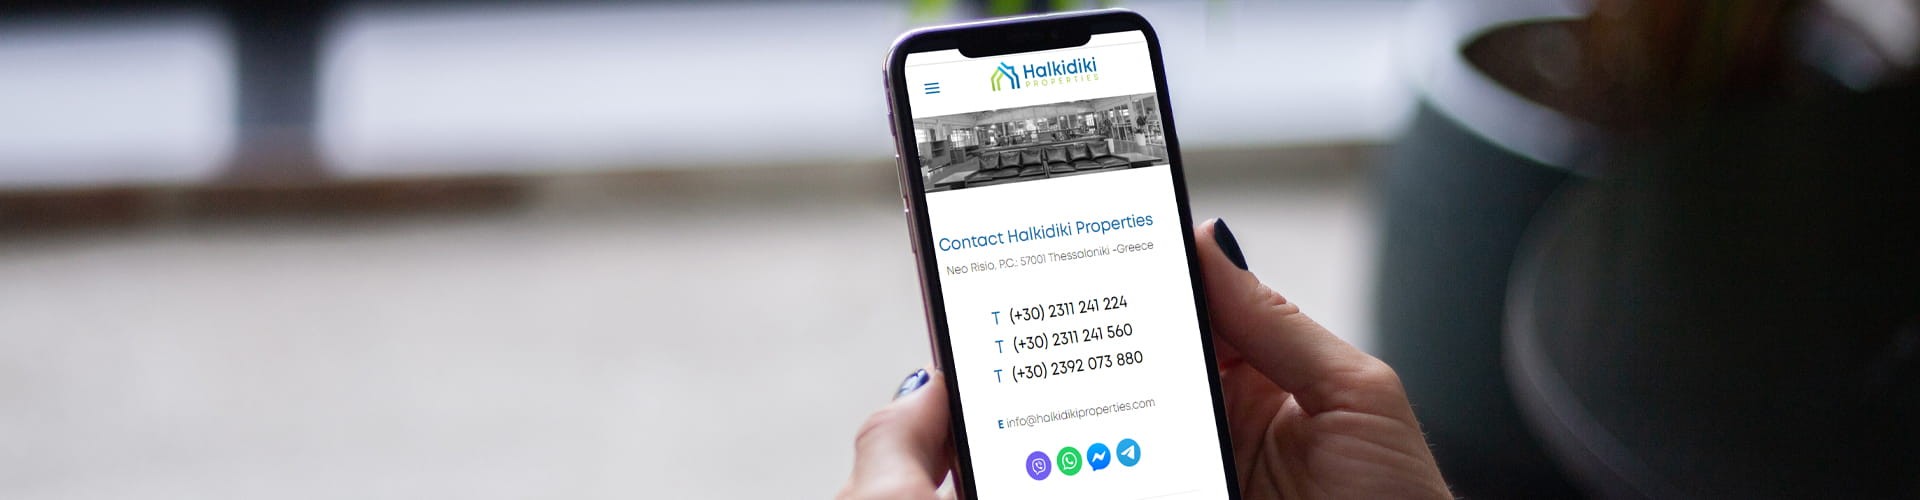 Kontaktirajte Halkidiki Properties